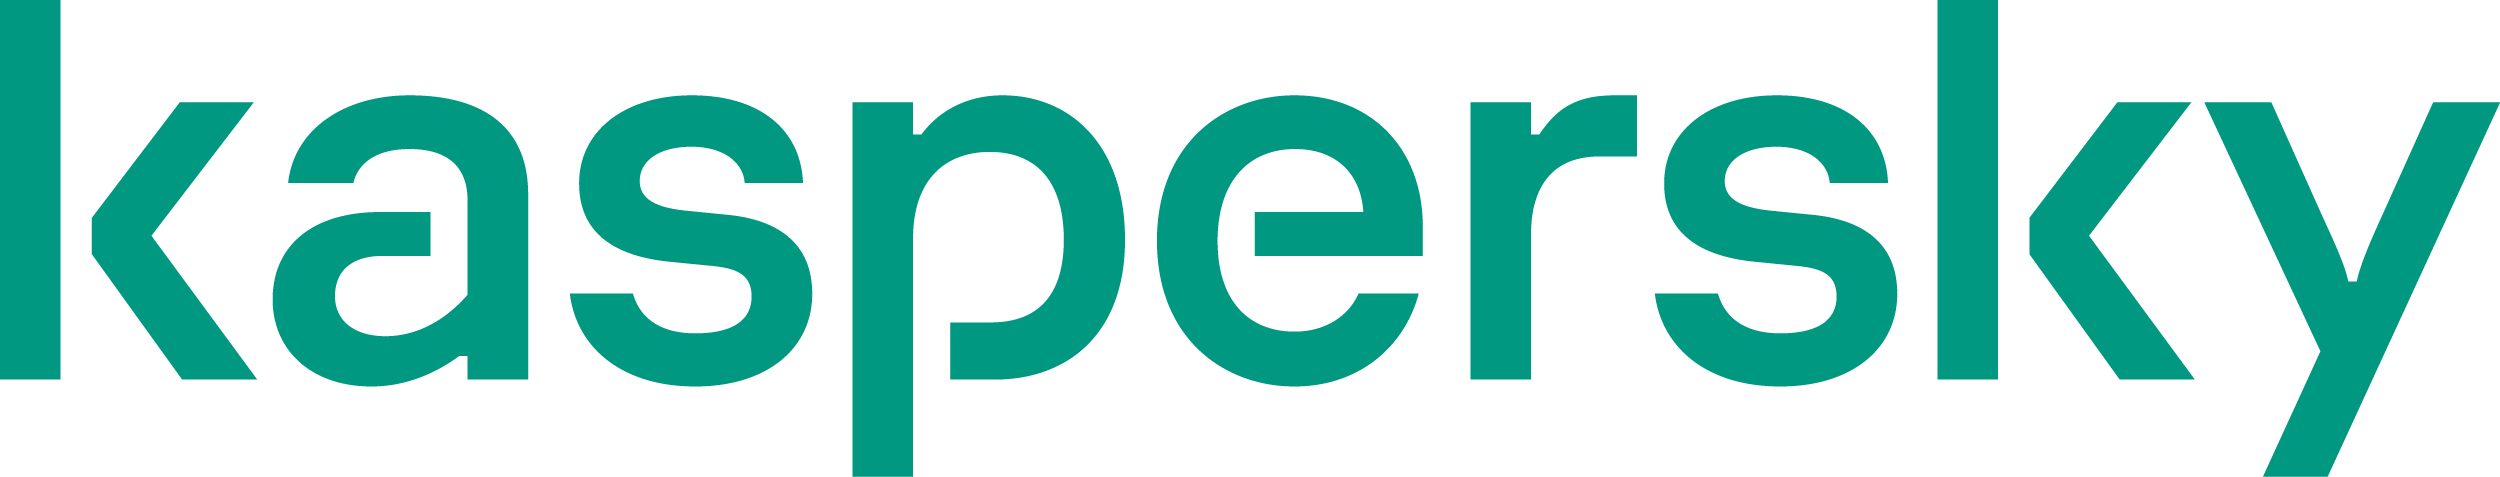 Kaspersky logo green_new.png.png